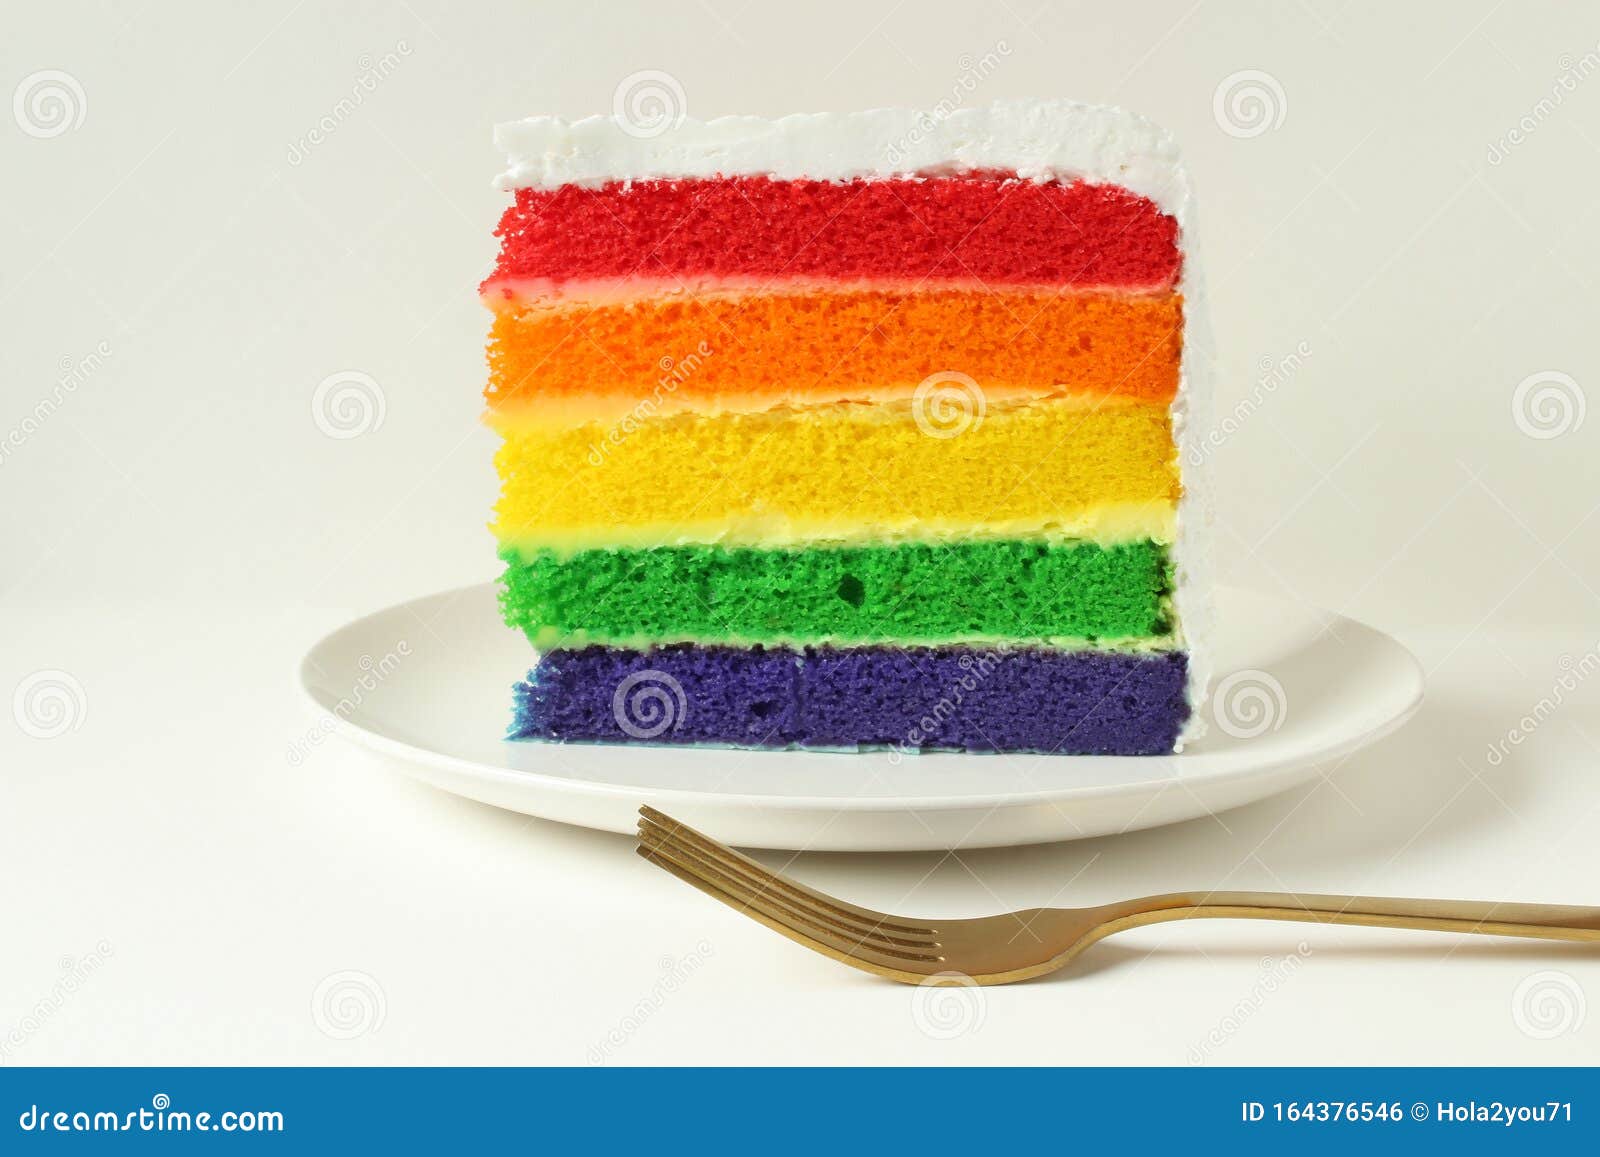 Share 73+ side view of cake super hot - in.daotaonec